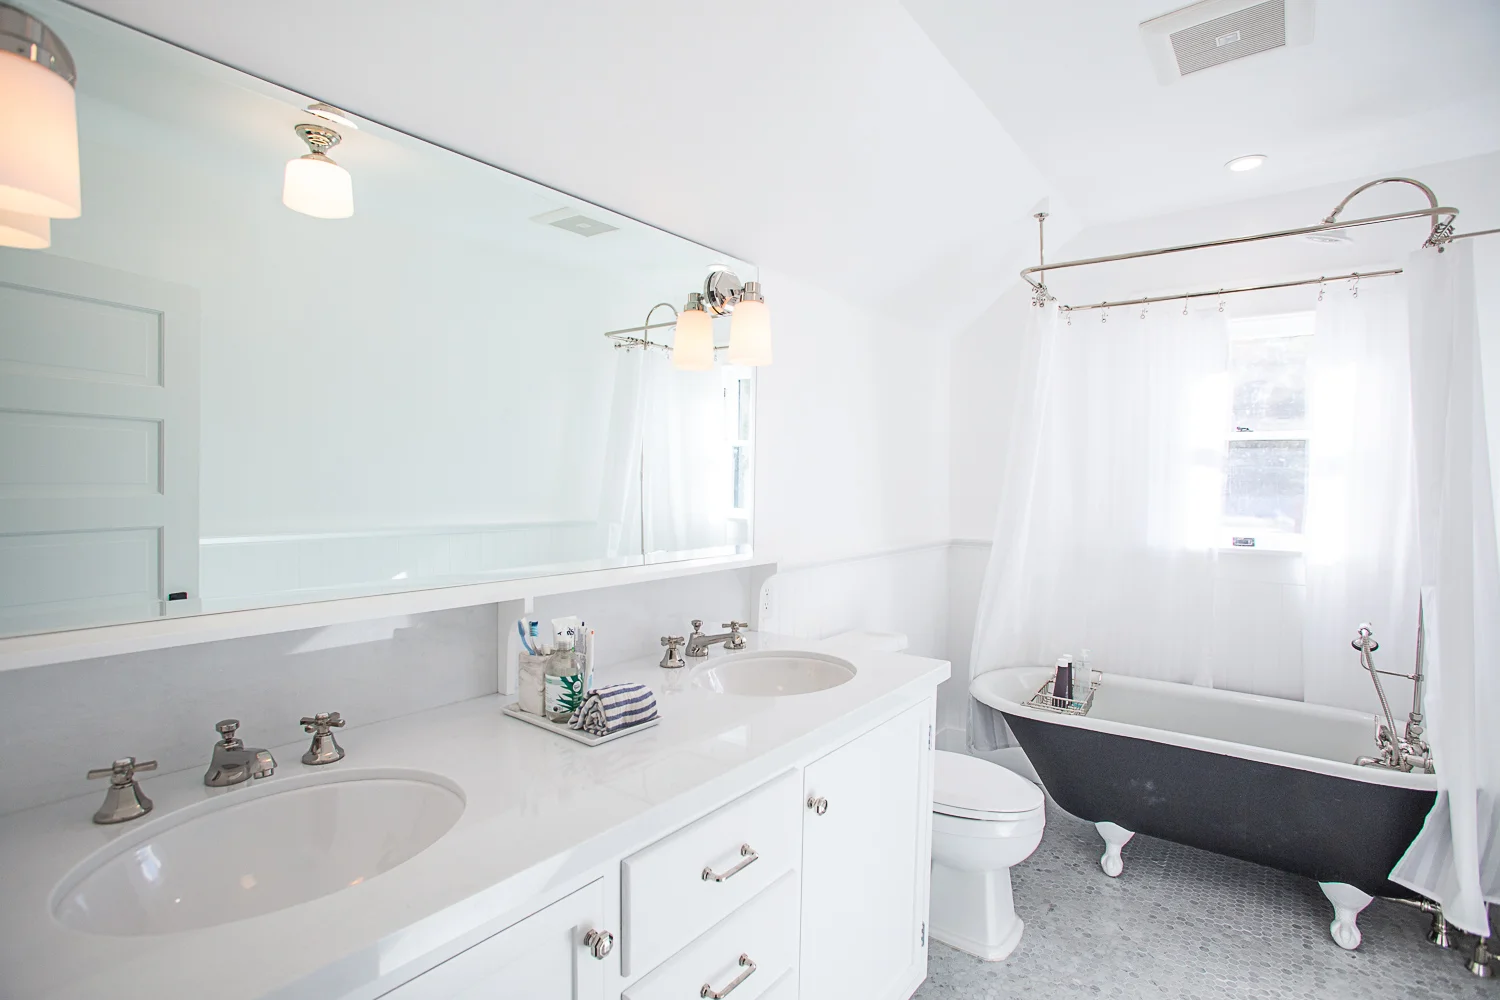 Double vanity bathroom design with custom tiling and amenities.